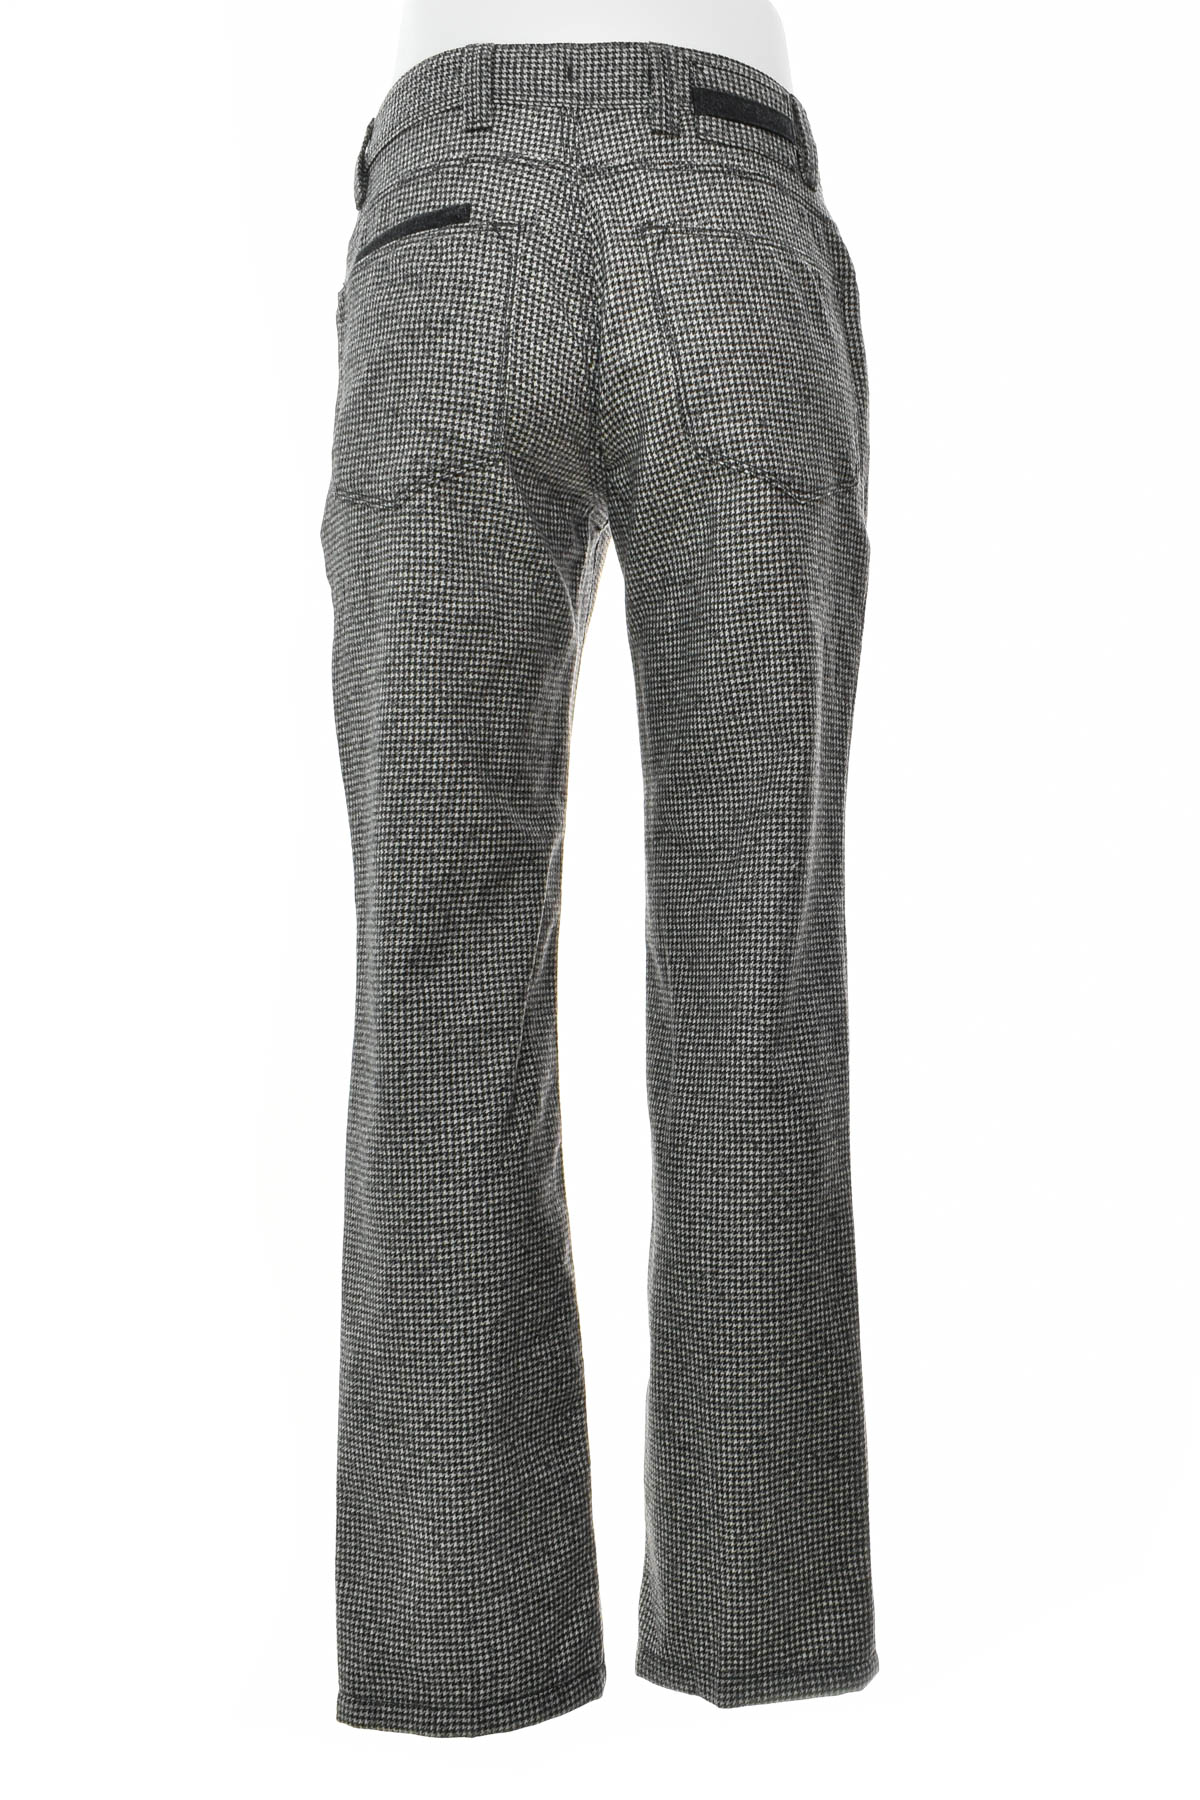 Men's trousers - Hiltl - 1